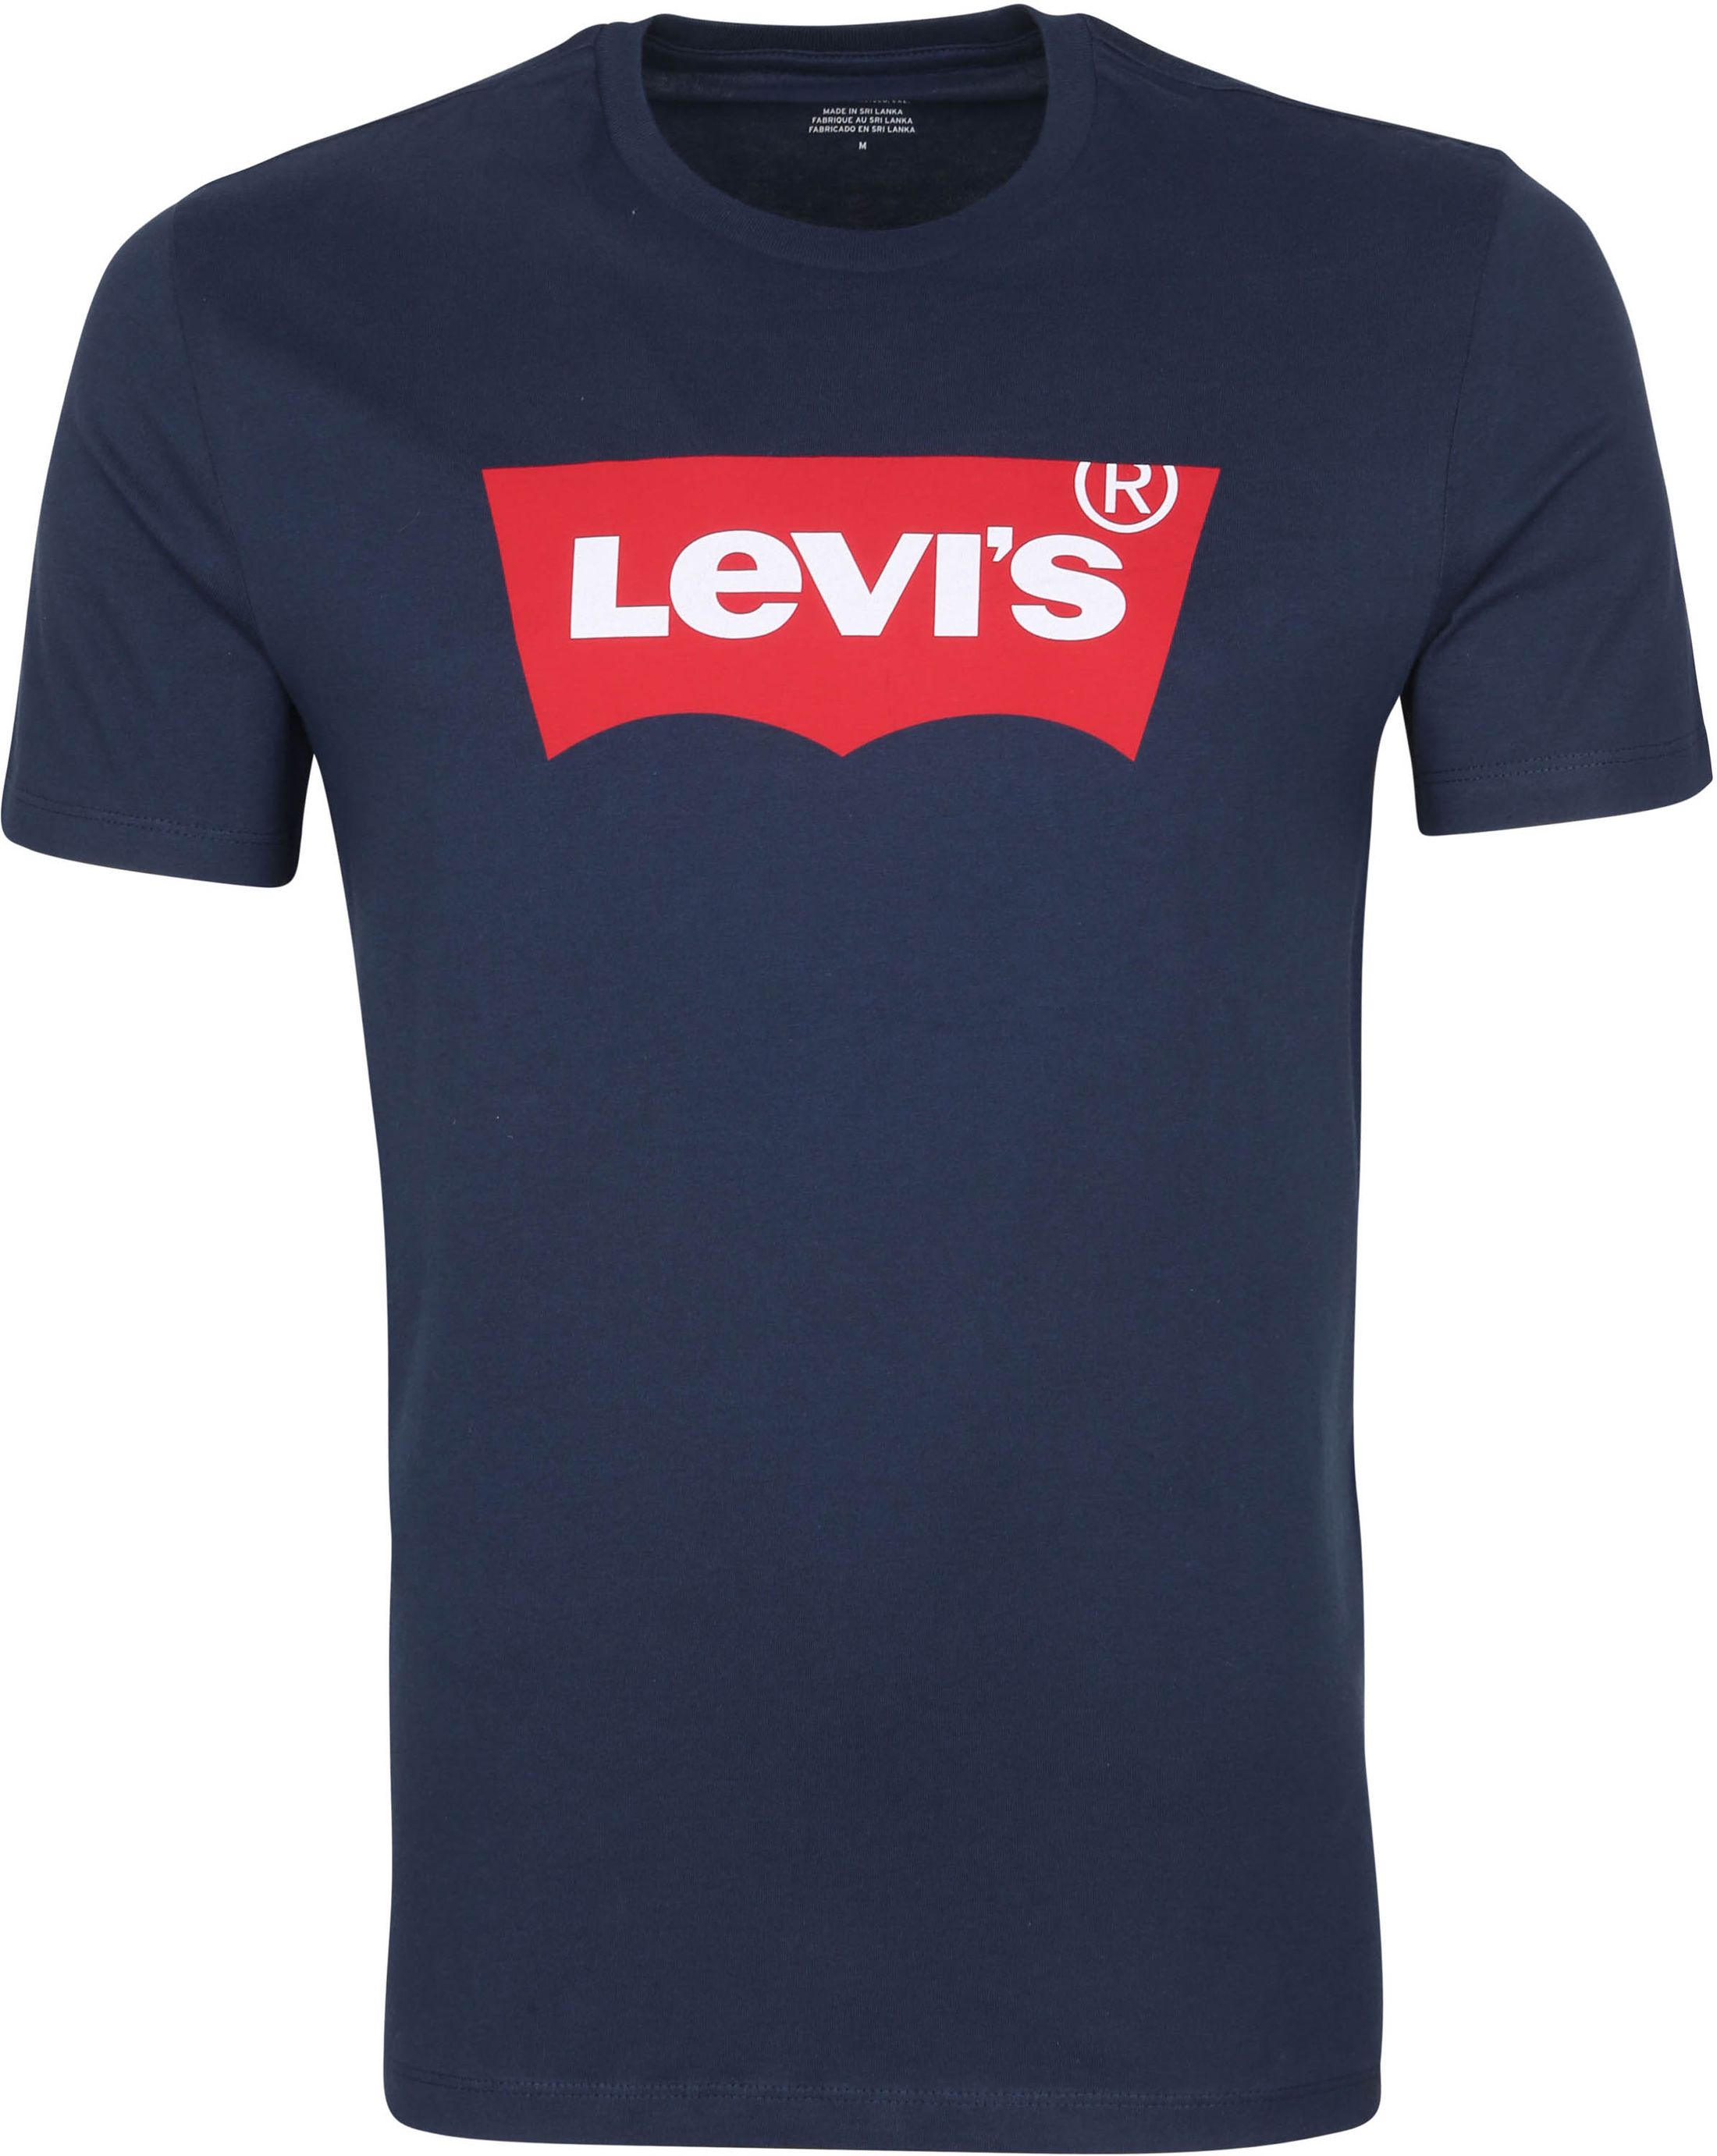 Levi's T Shirt Graphic Logo Dark Blue Blue size L